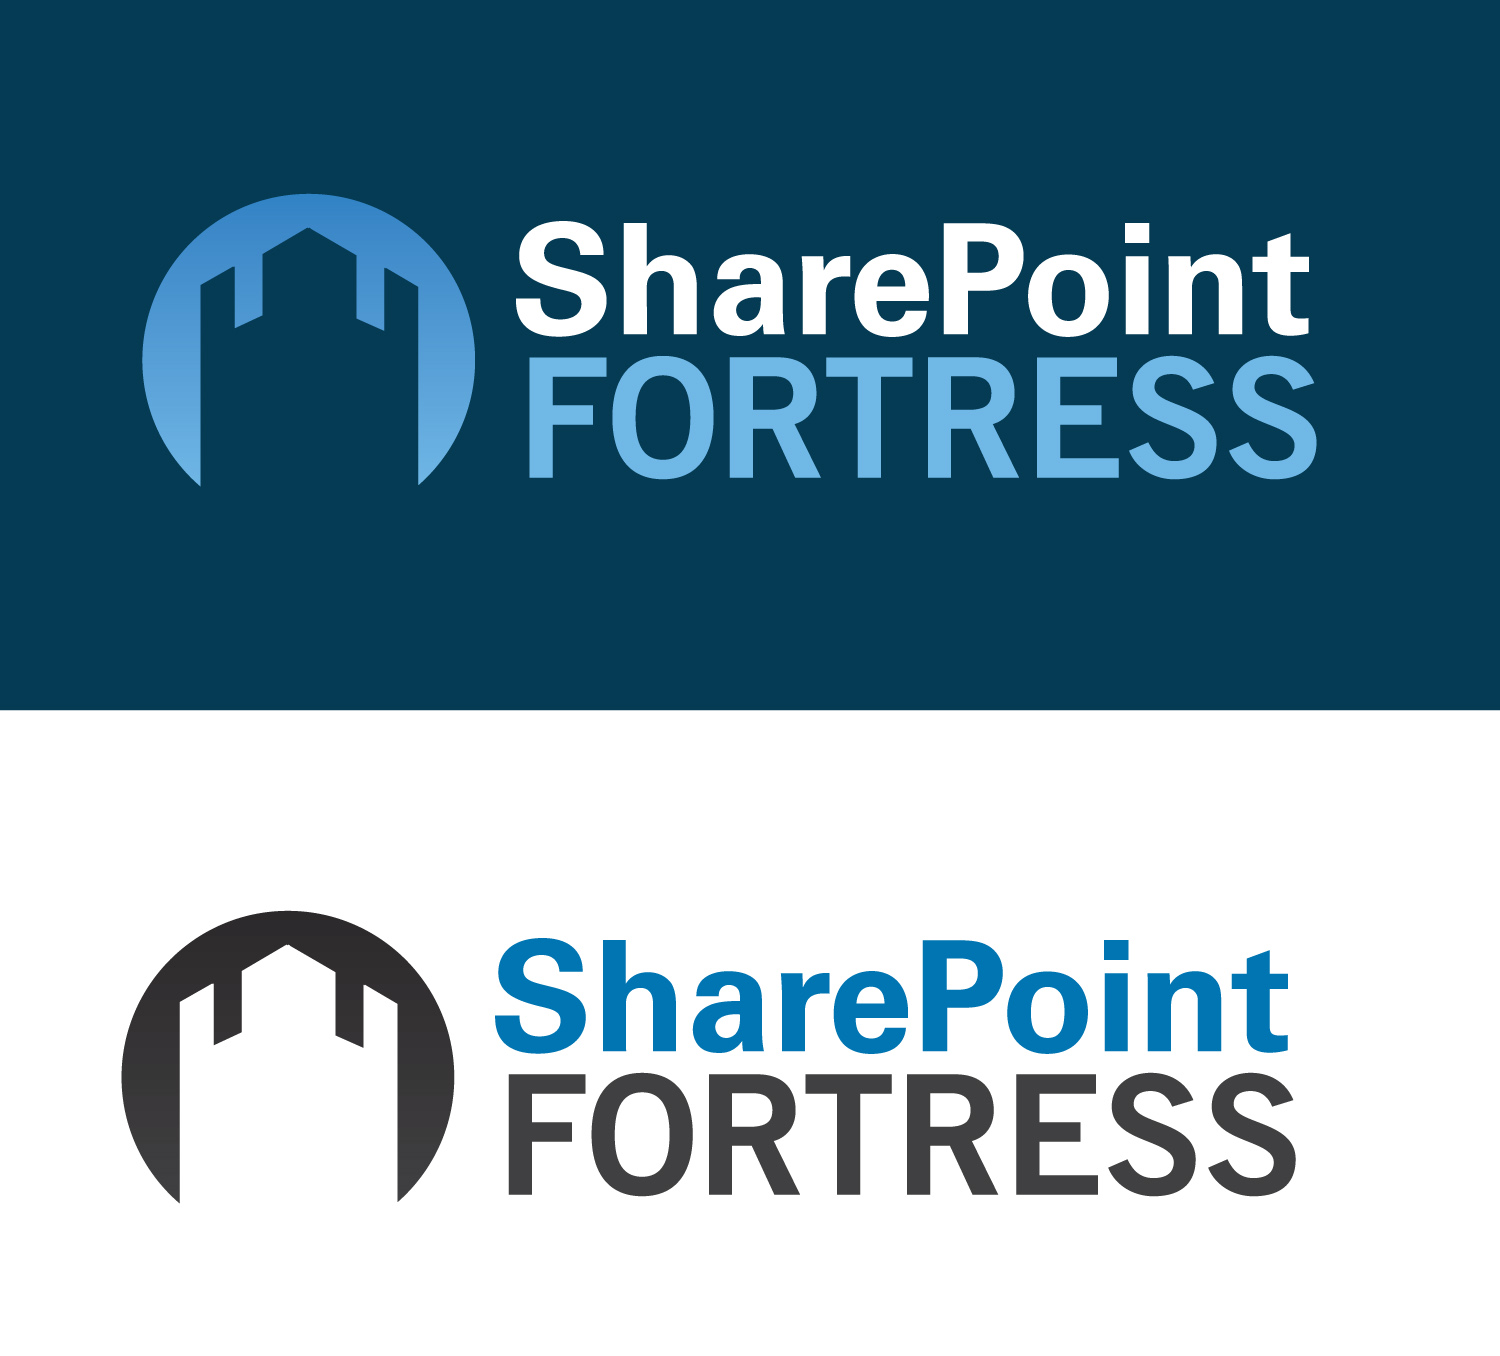 SharePoint Fortress logo